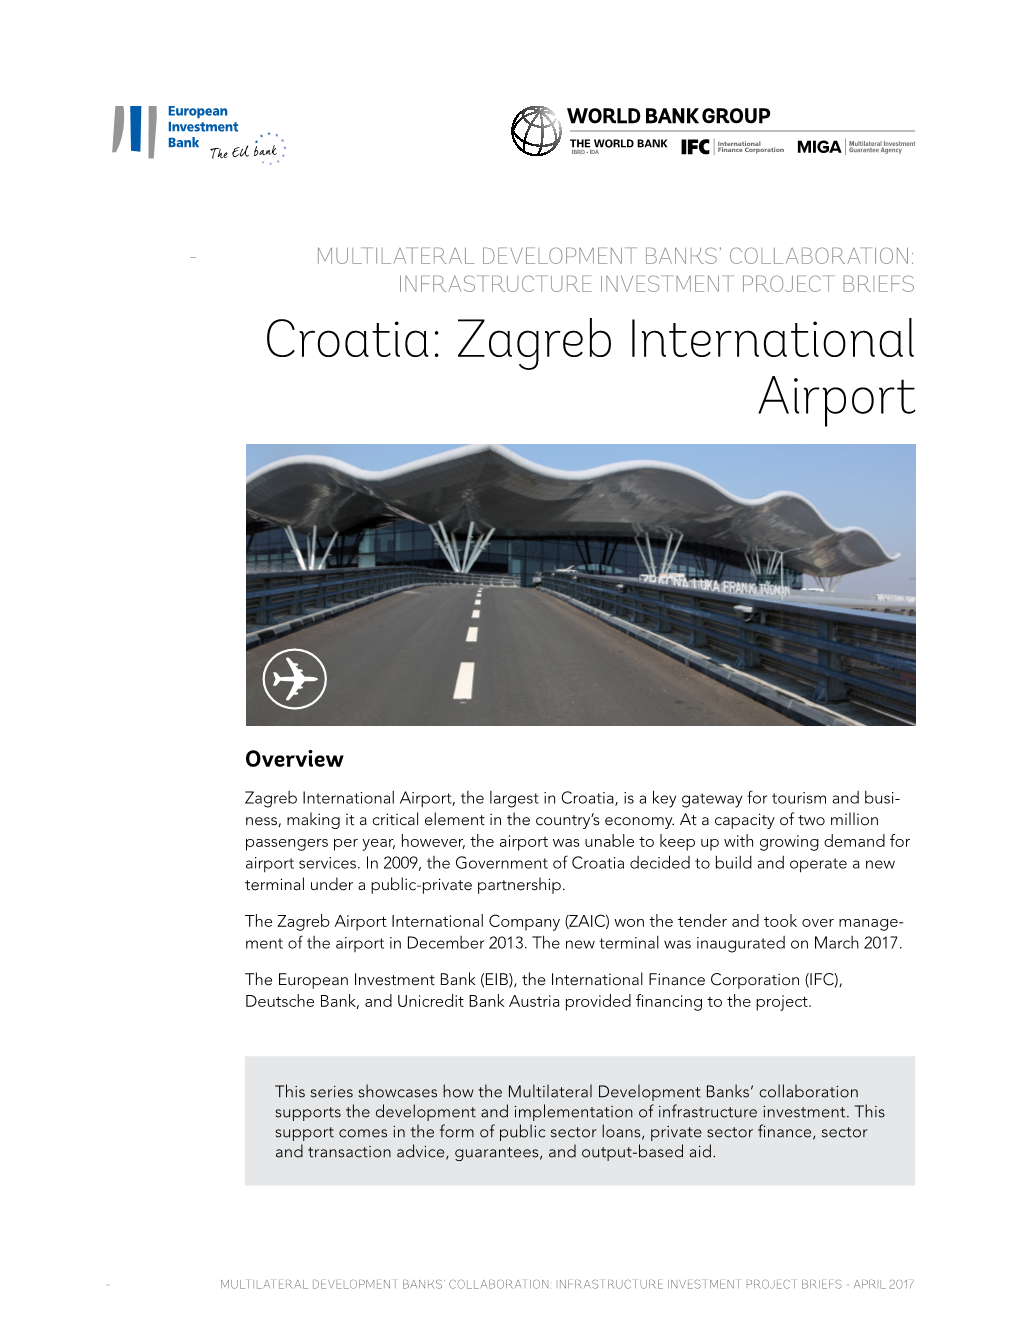 Croatia: Zagreb International Airport